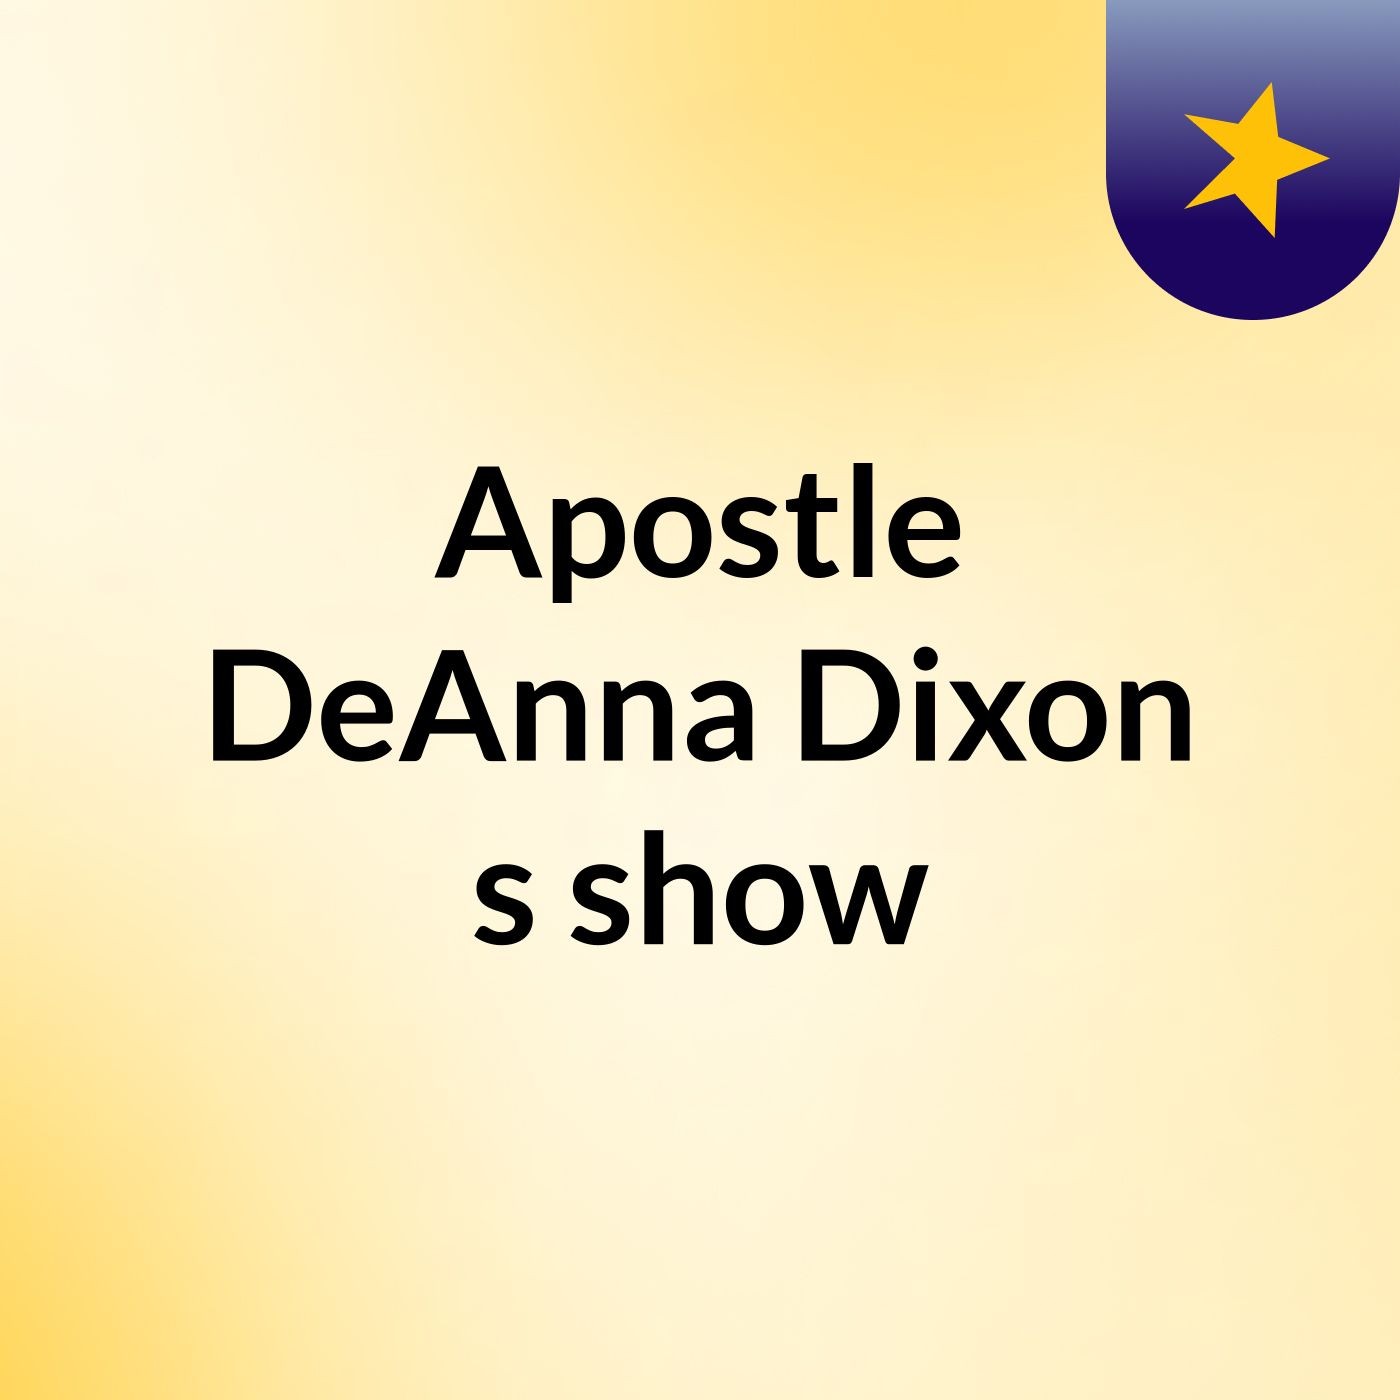 Apostle DeAnna Dixon's show